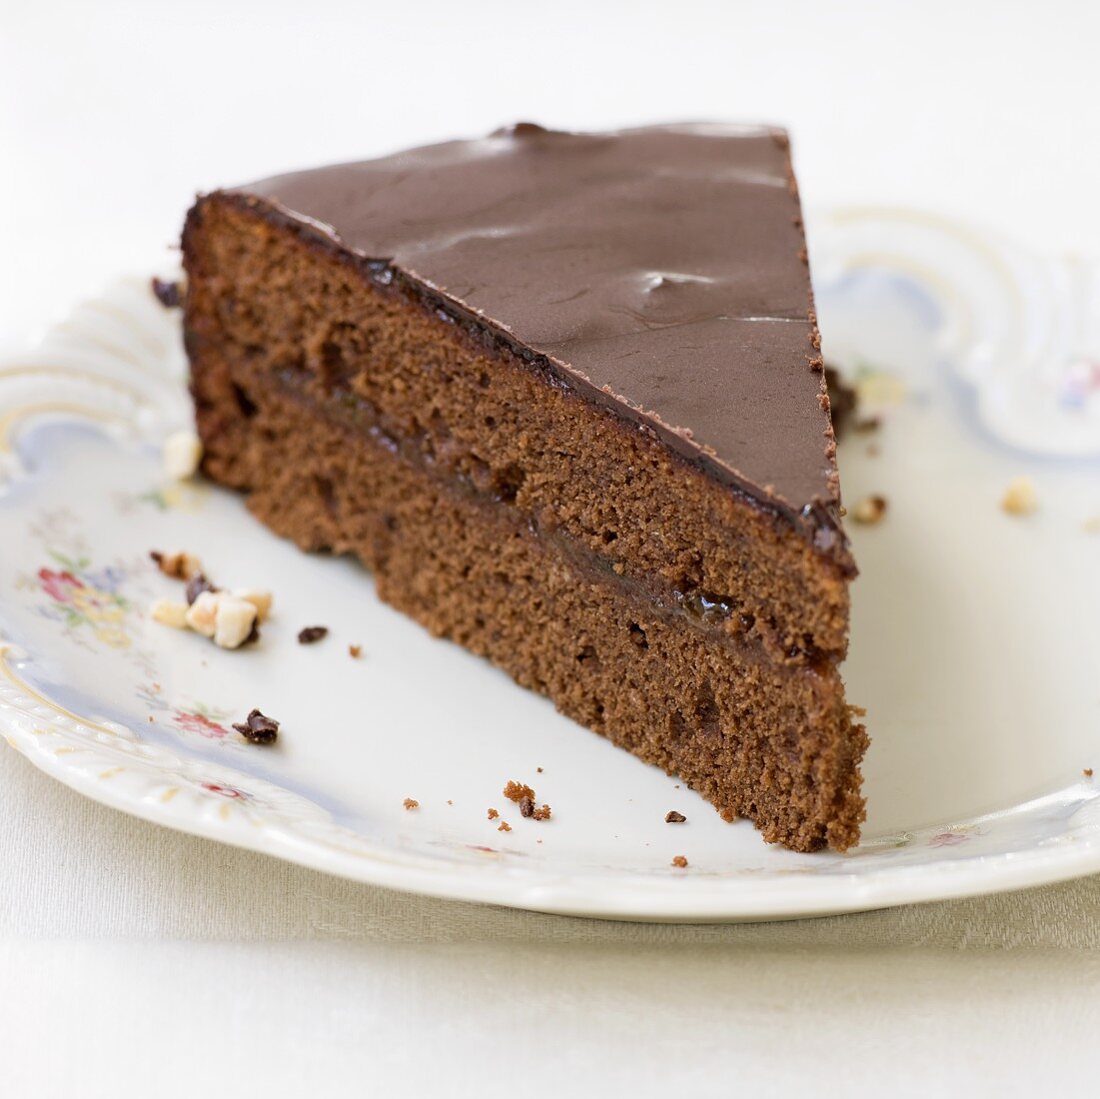 A piece of Sachertorte (chocolate cake) on plate